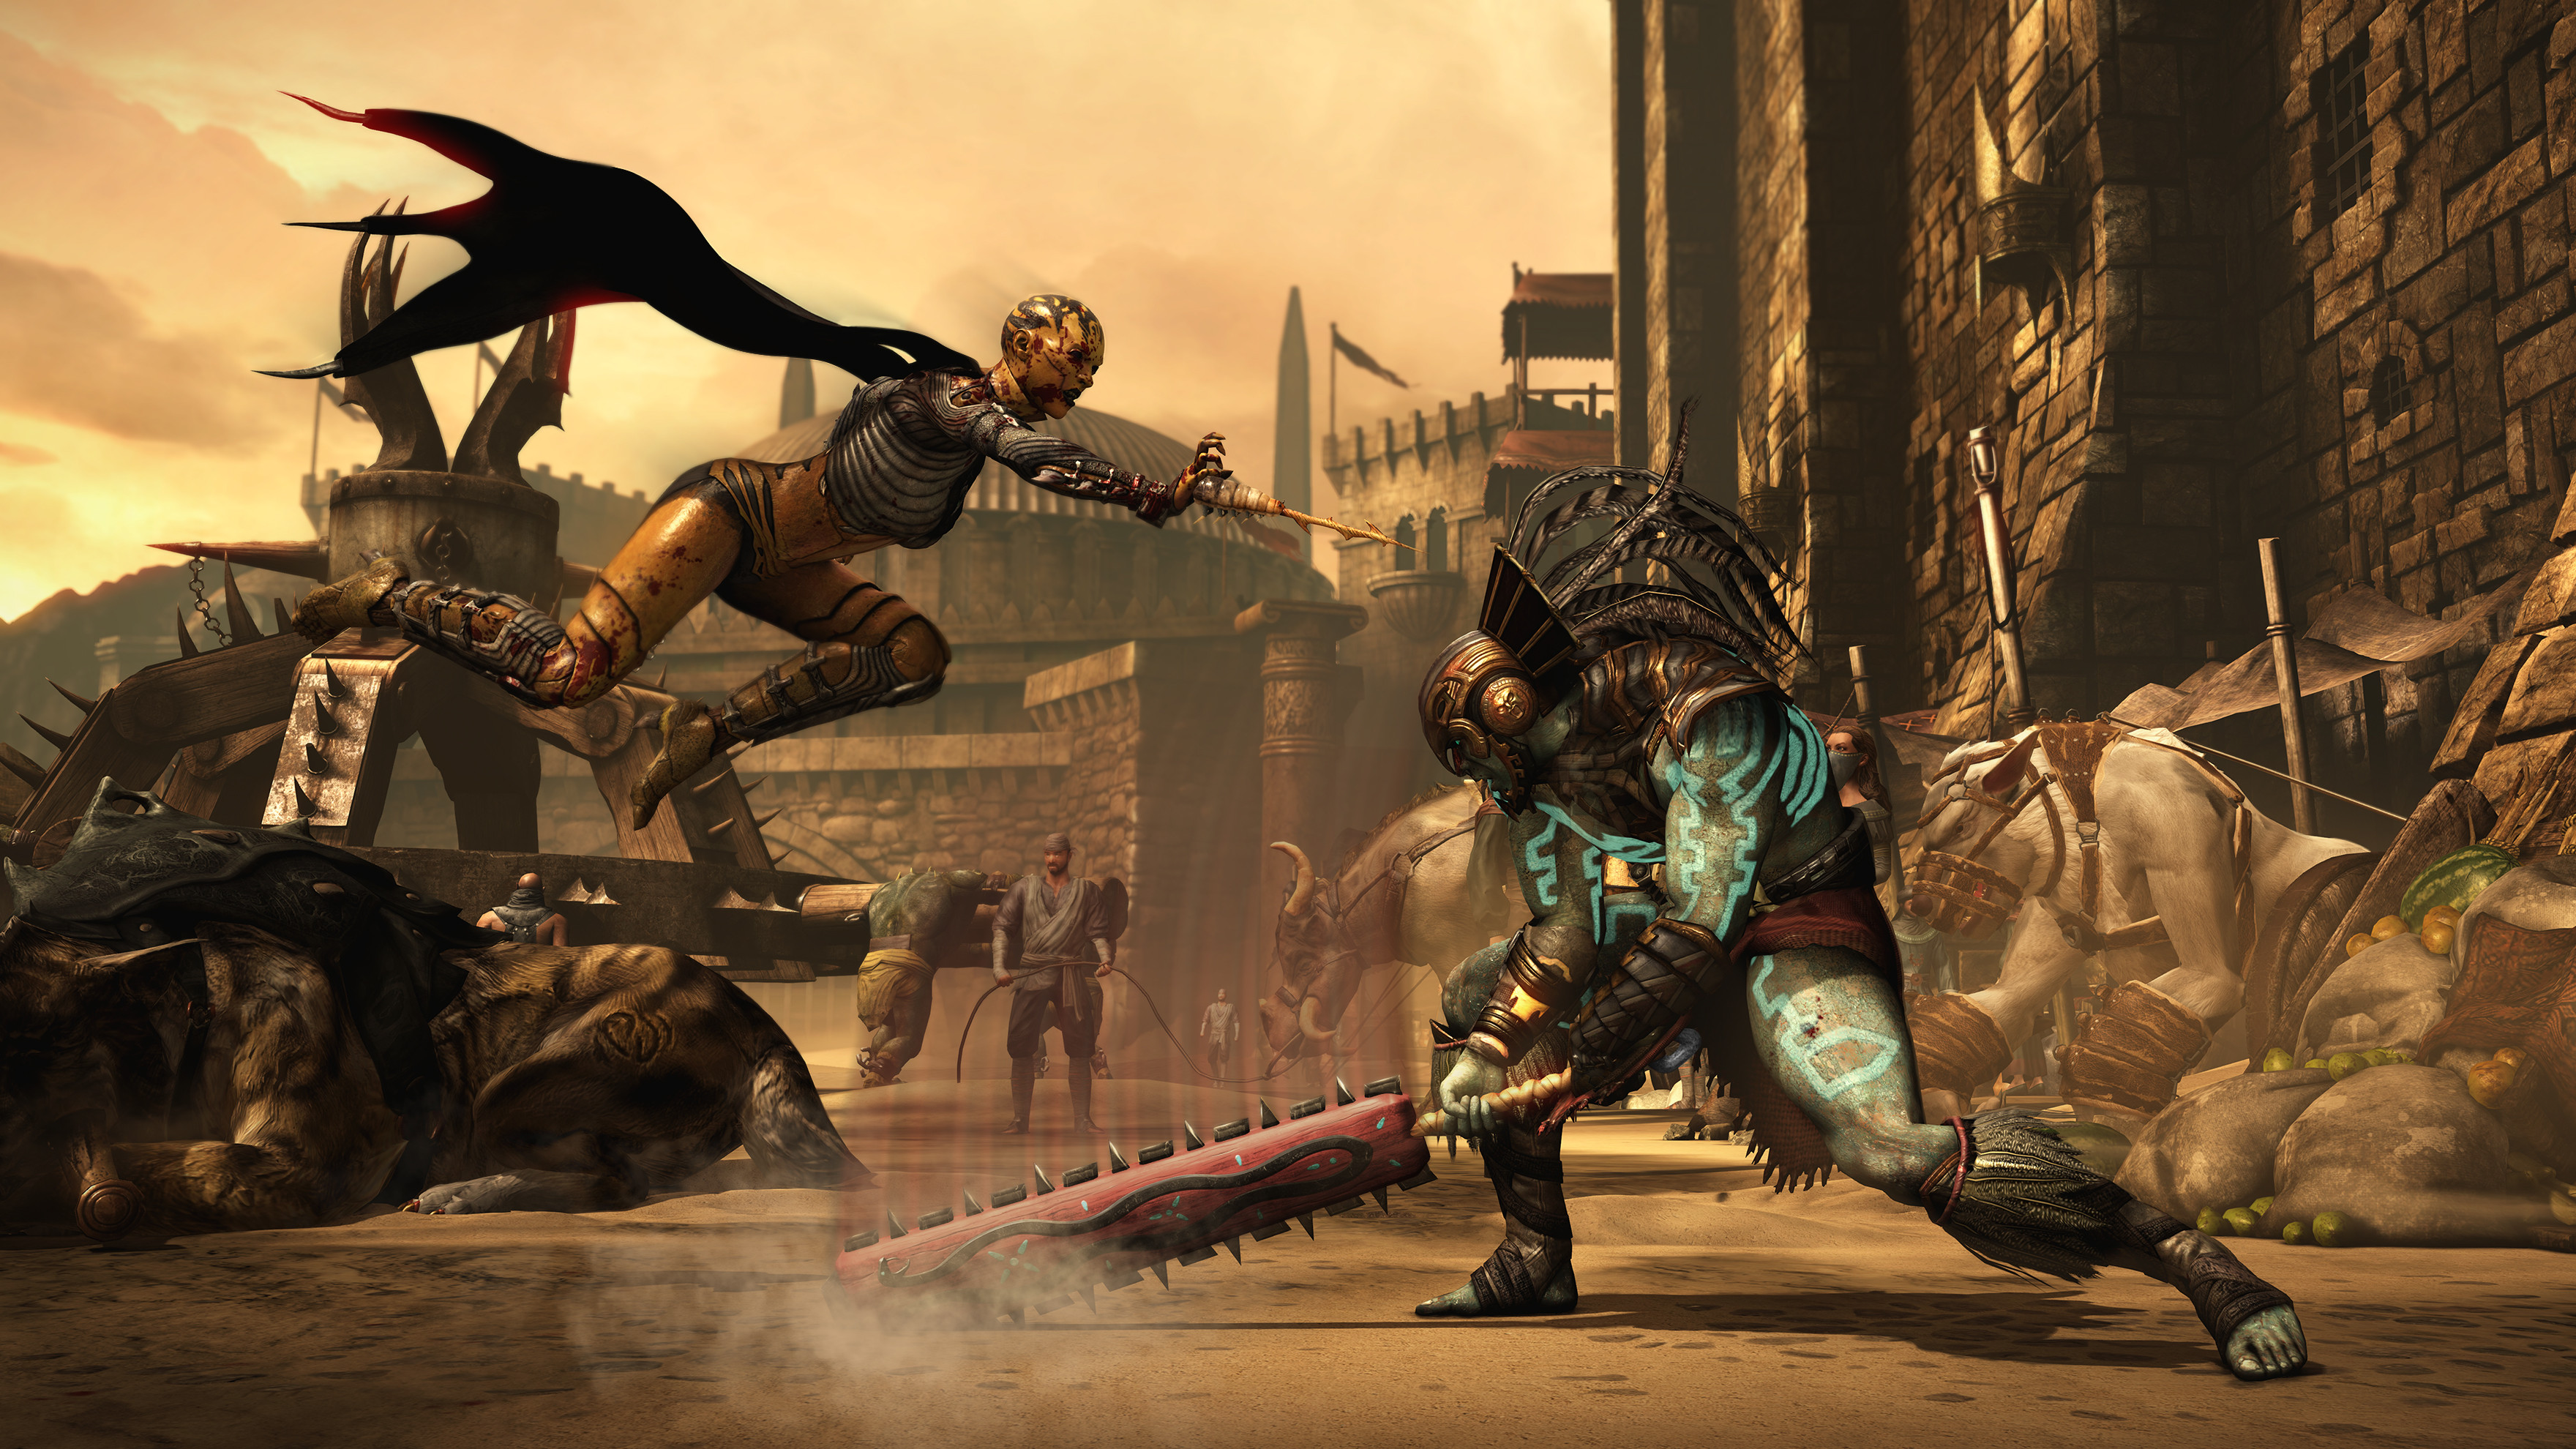 Mortal-Kombat-X-screenshot-3.jpg